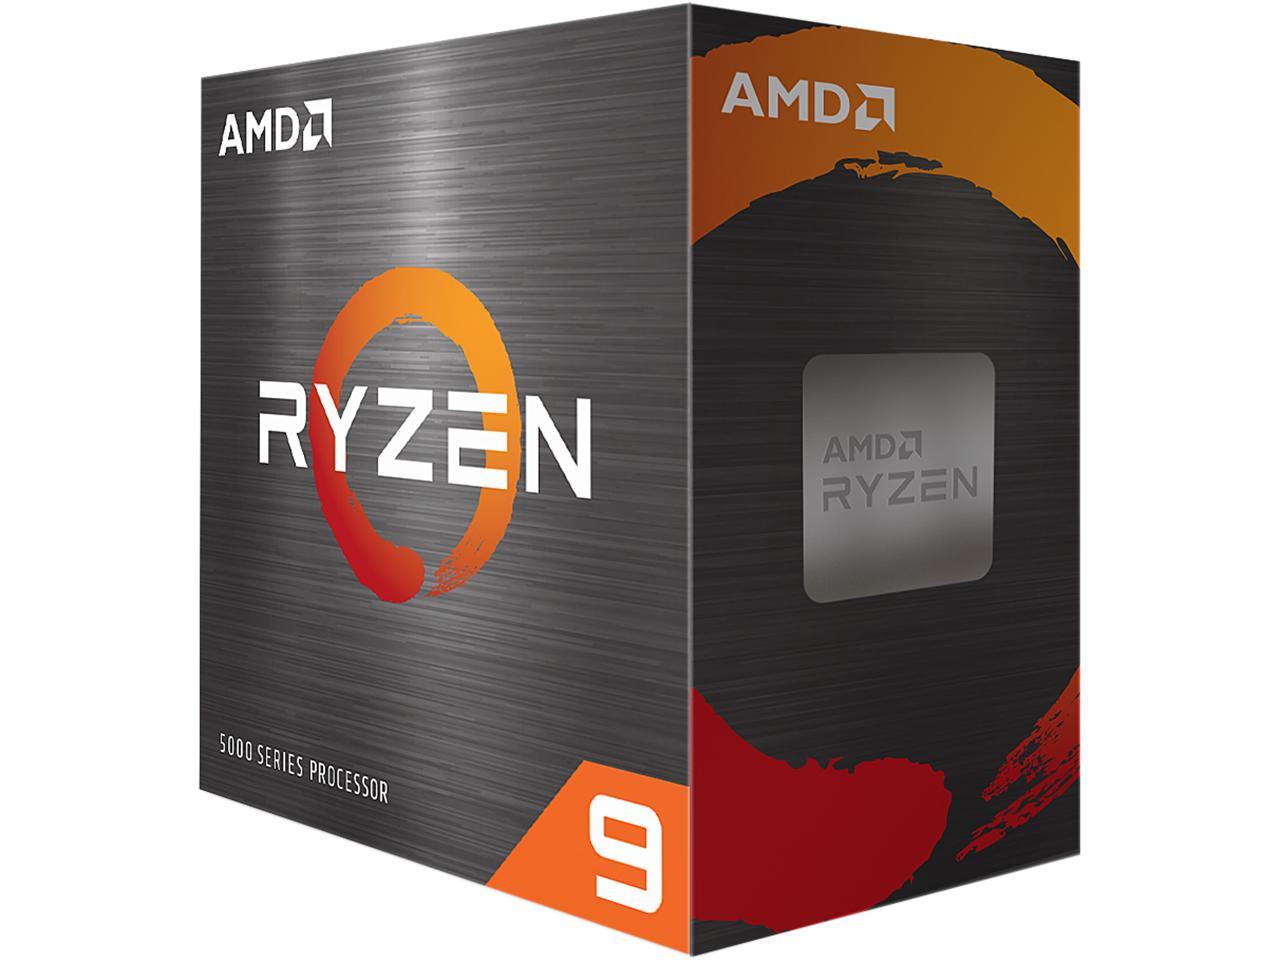 AMD Ryzen 9 5950X 16-Core 32-Thread Desktop Processor $739